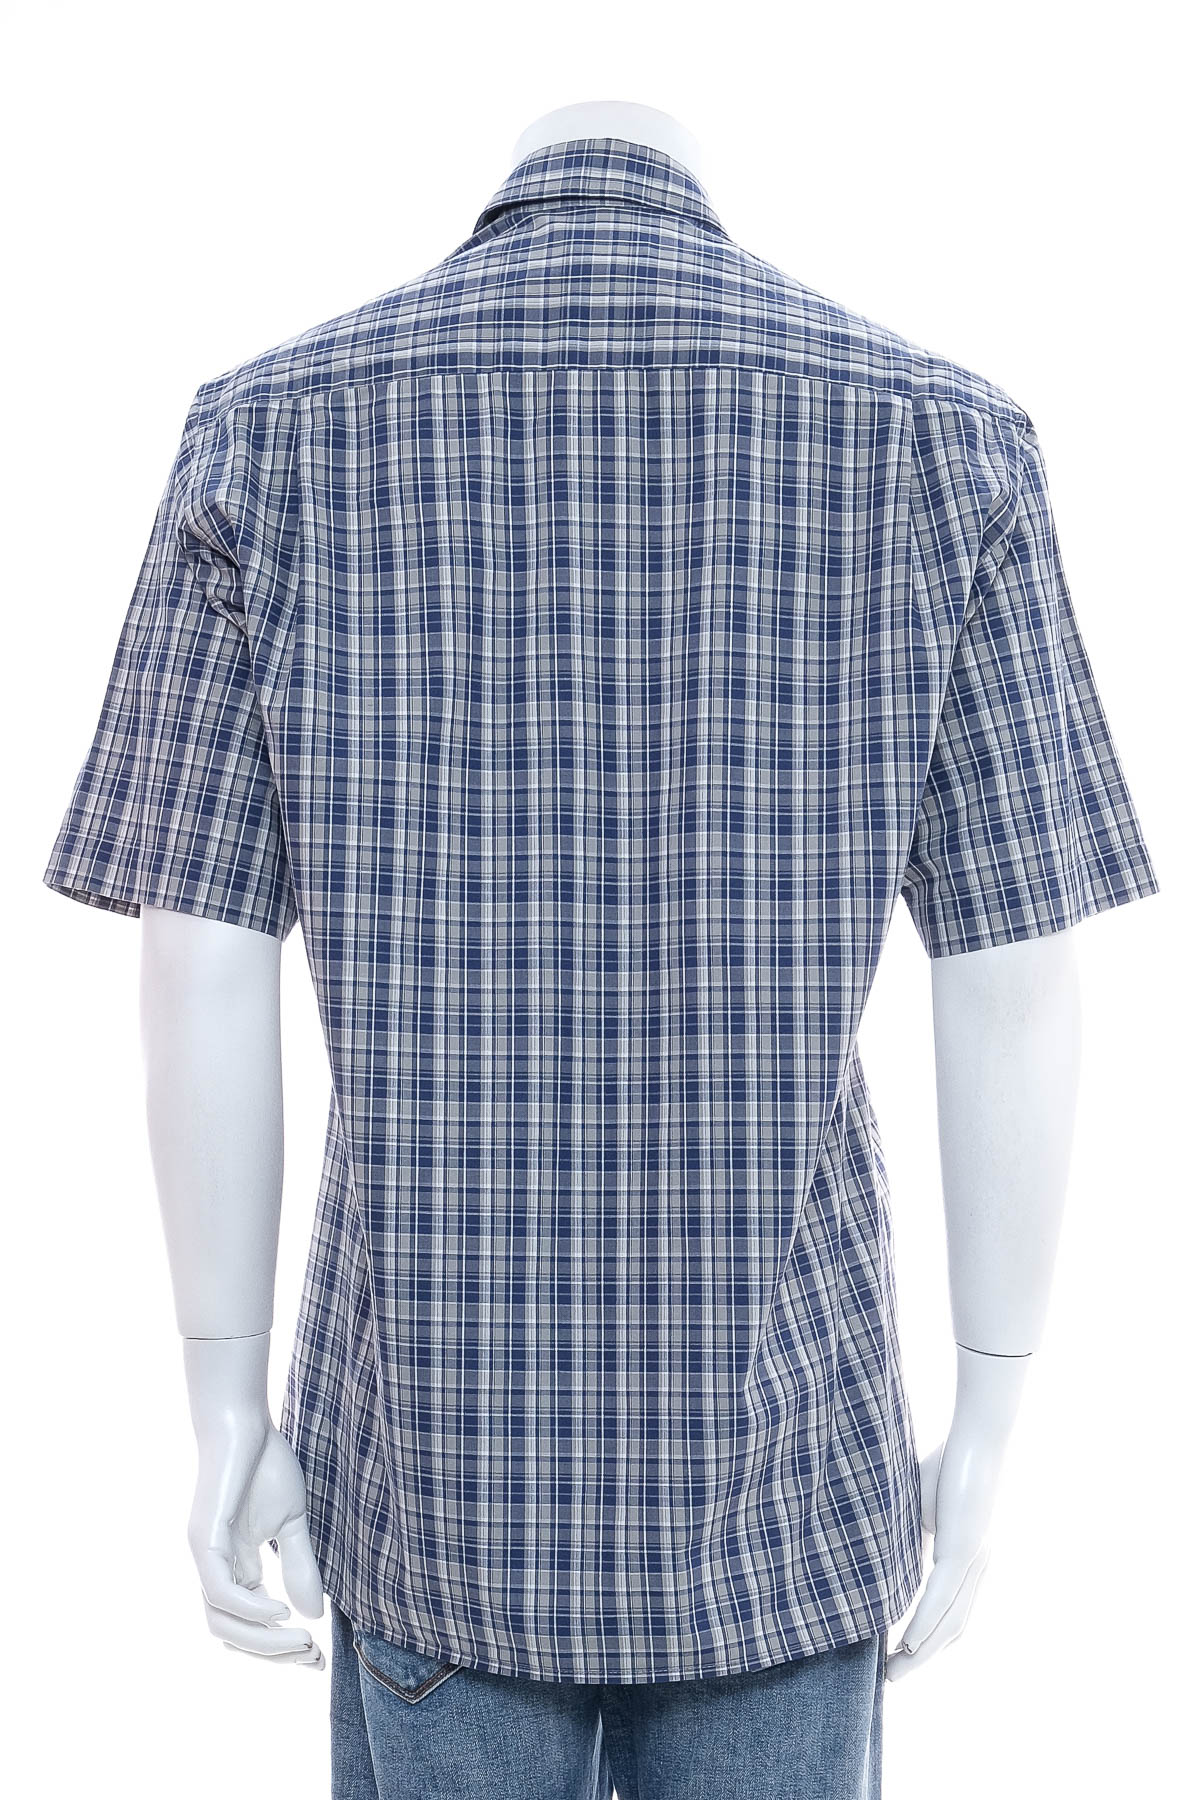 Men's shirt - Sk l'uomoda - 1